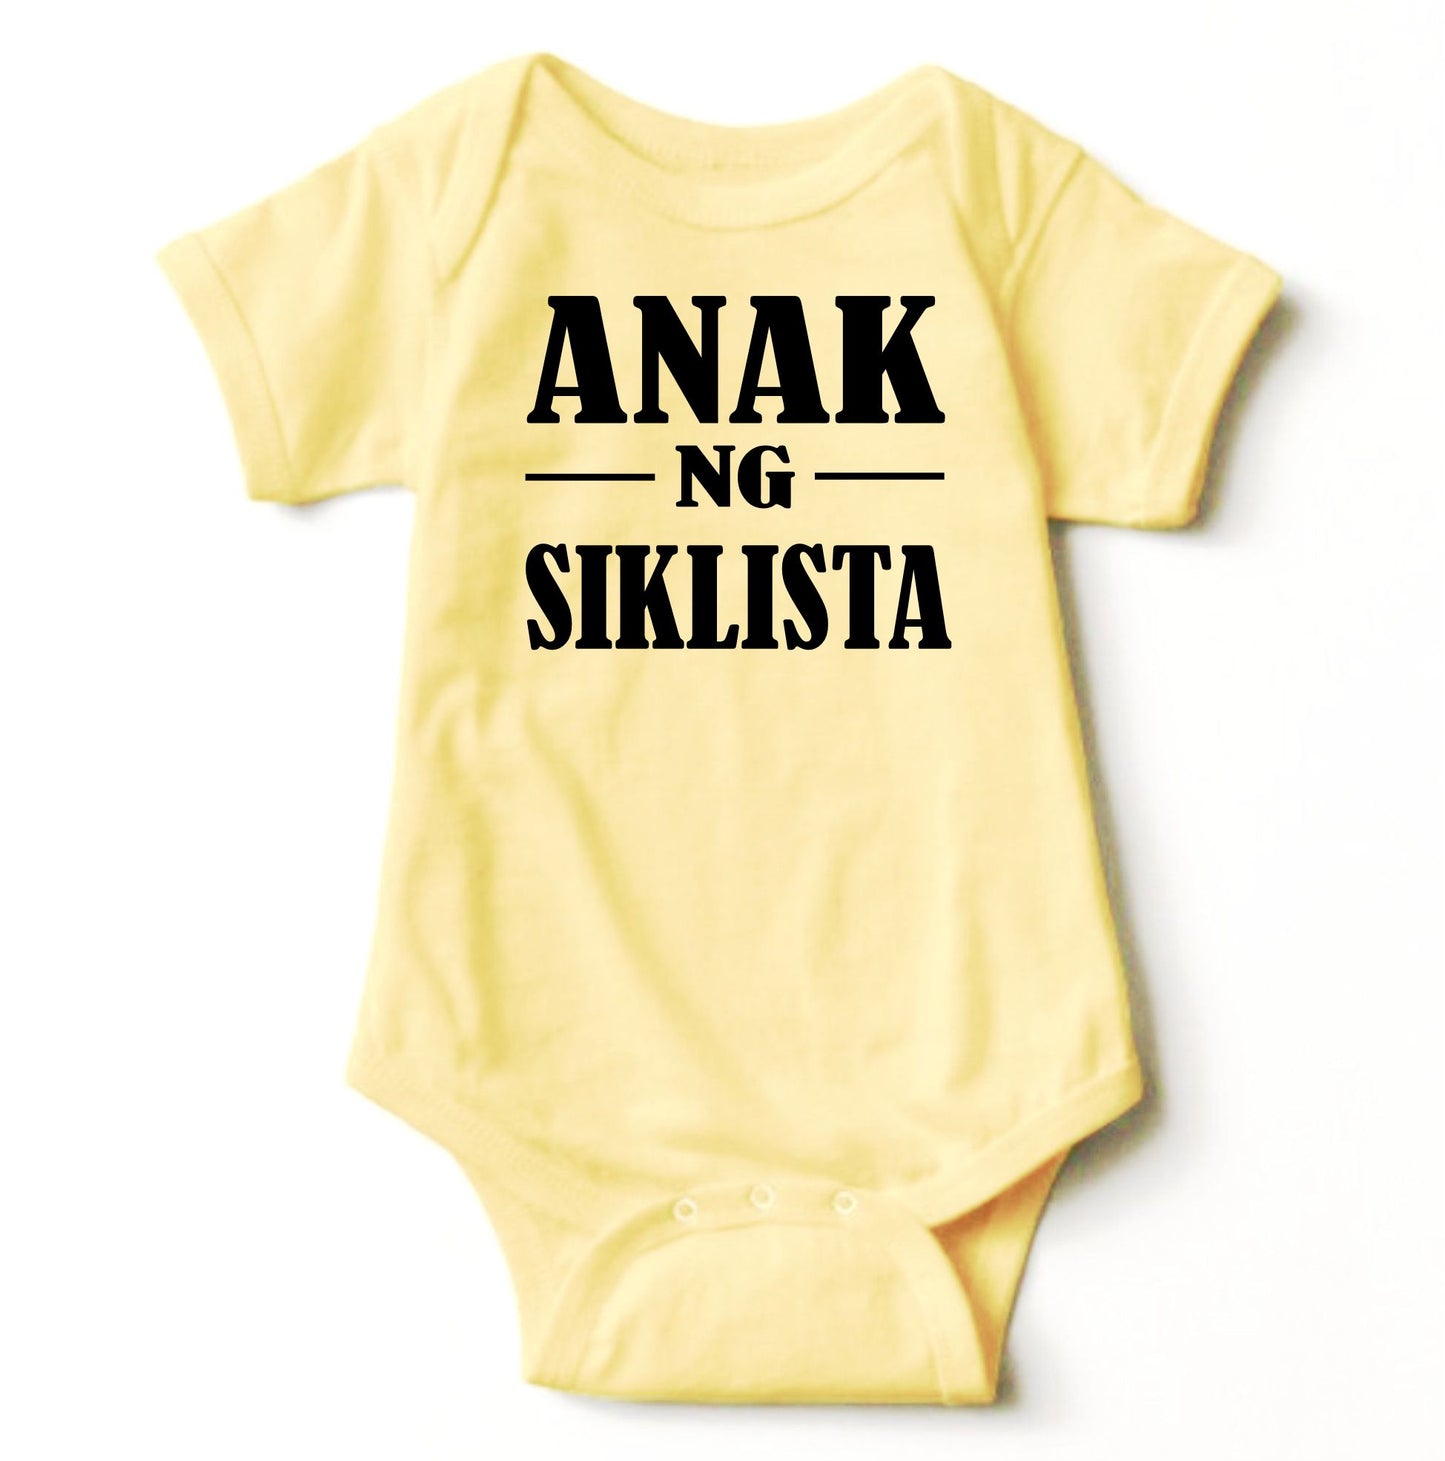 Baby Statement Onesies - Anak ng Siklista